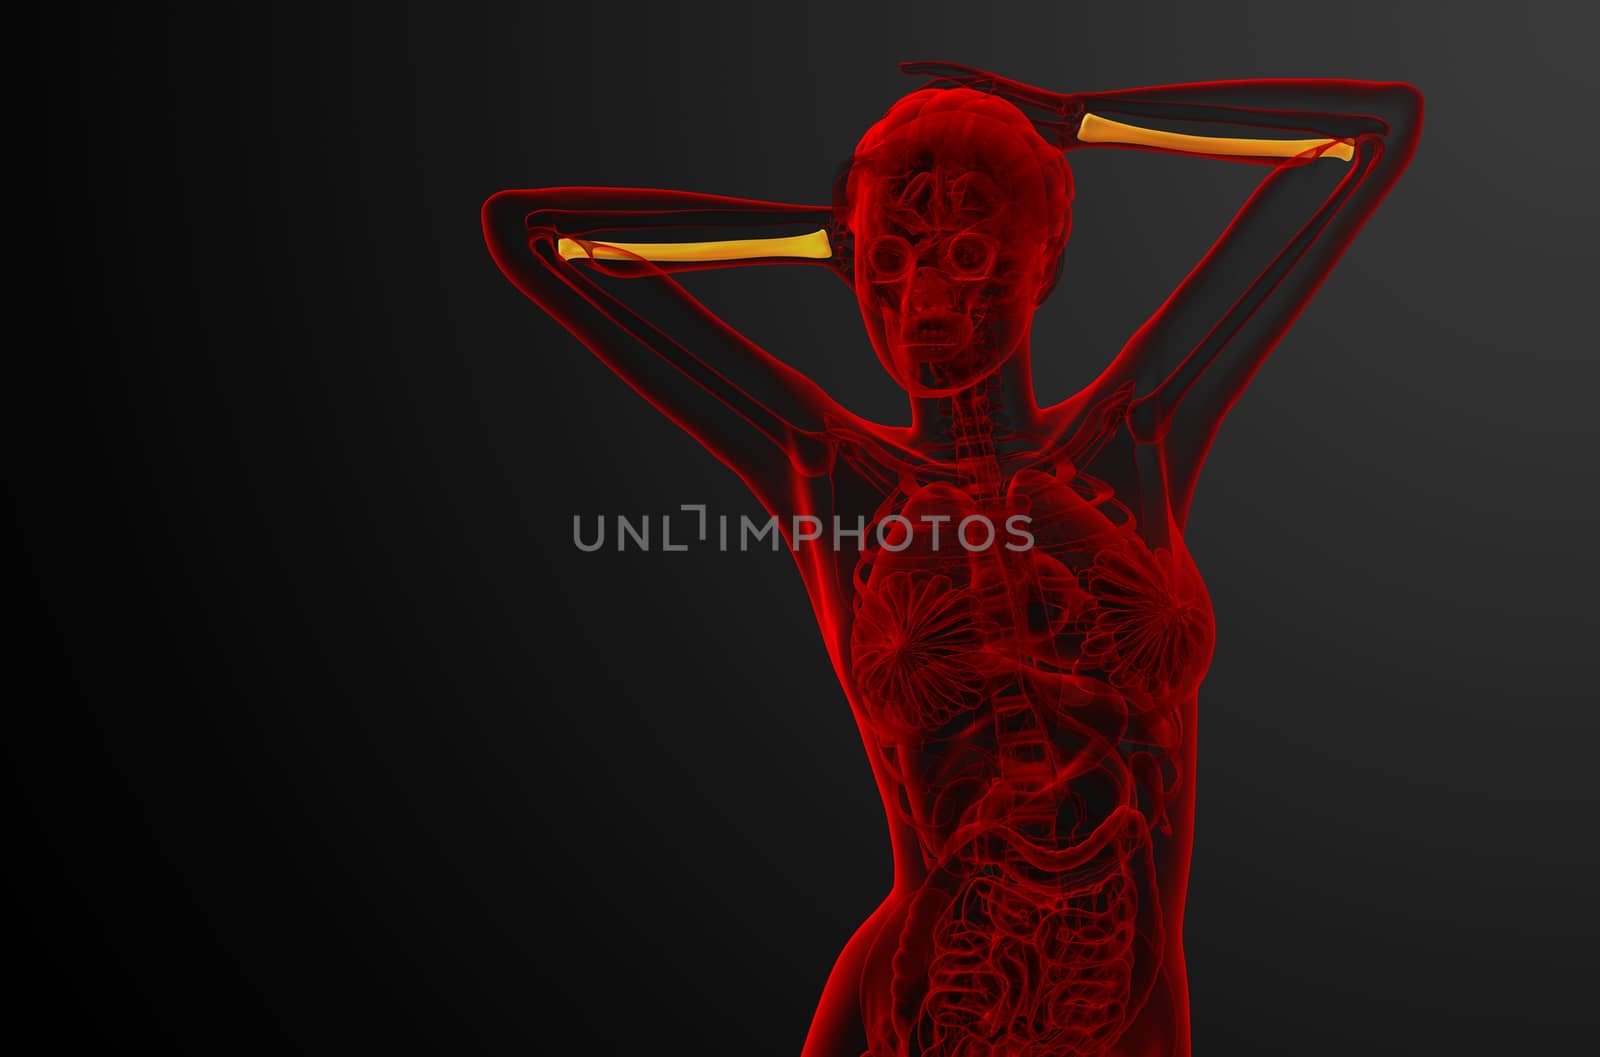 3d render medical illustration of the radius bone - front view